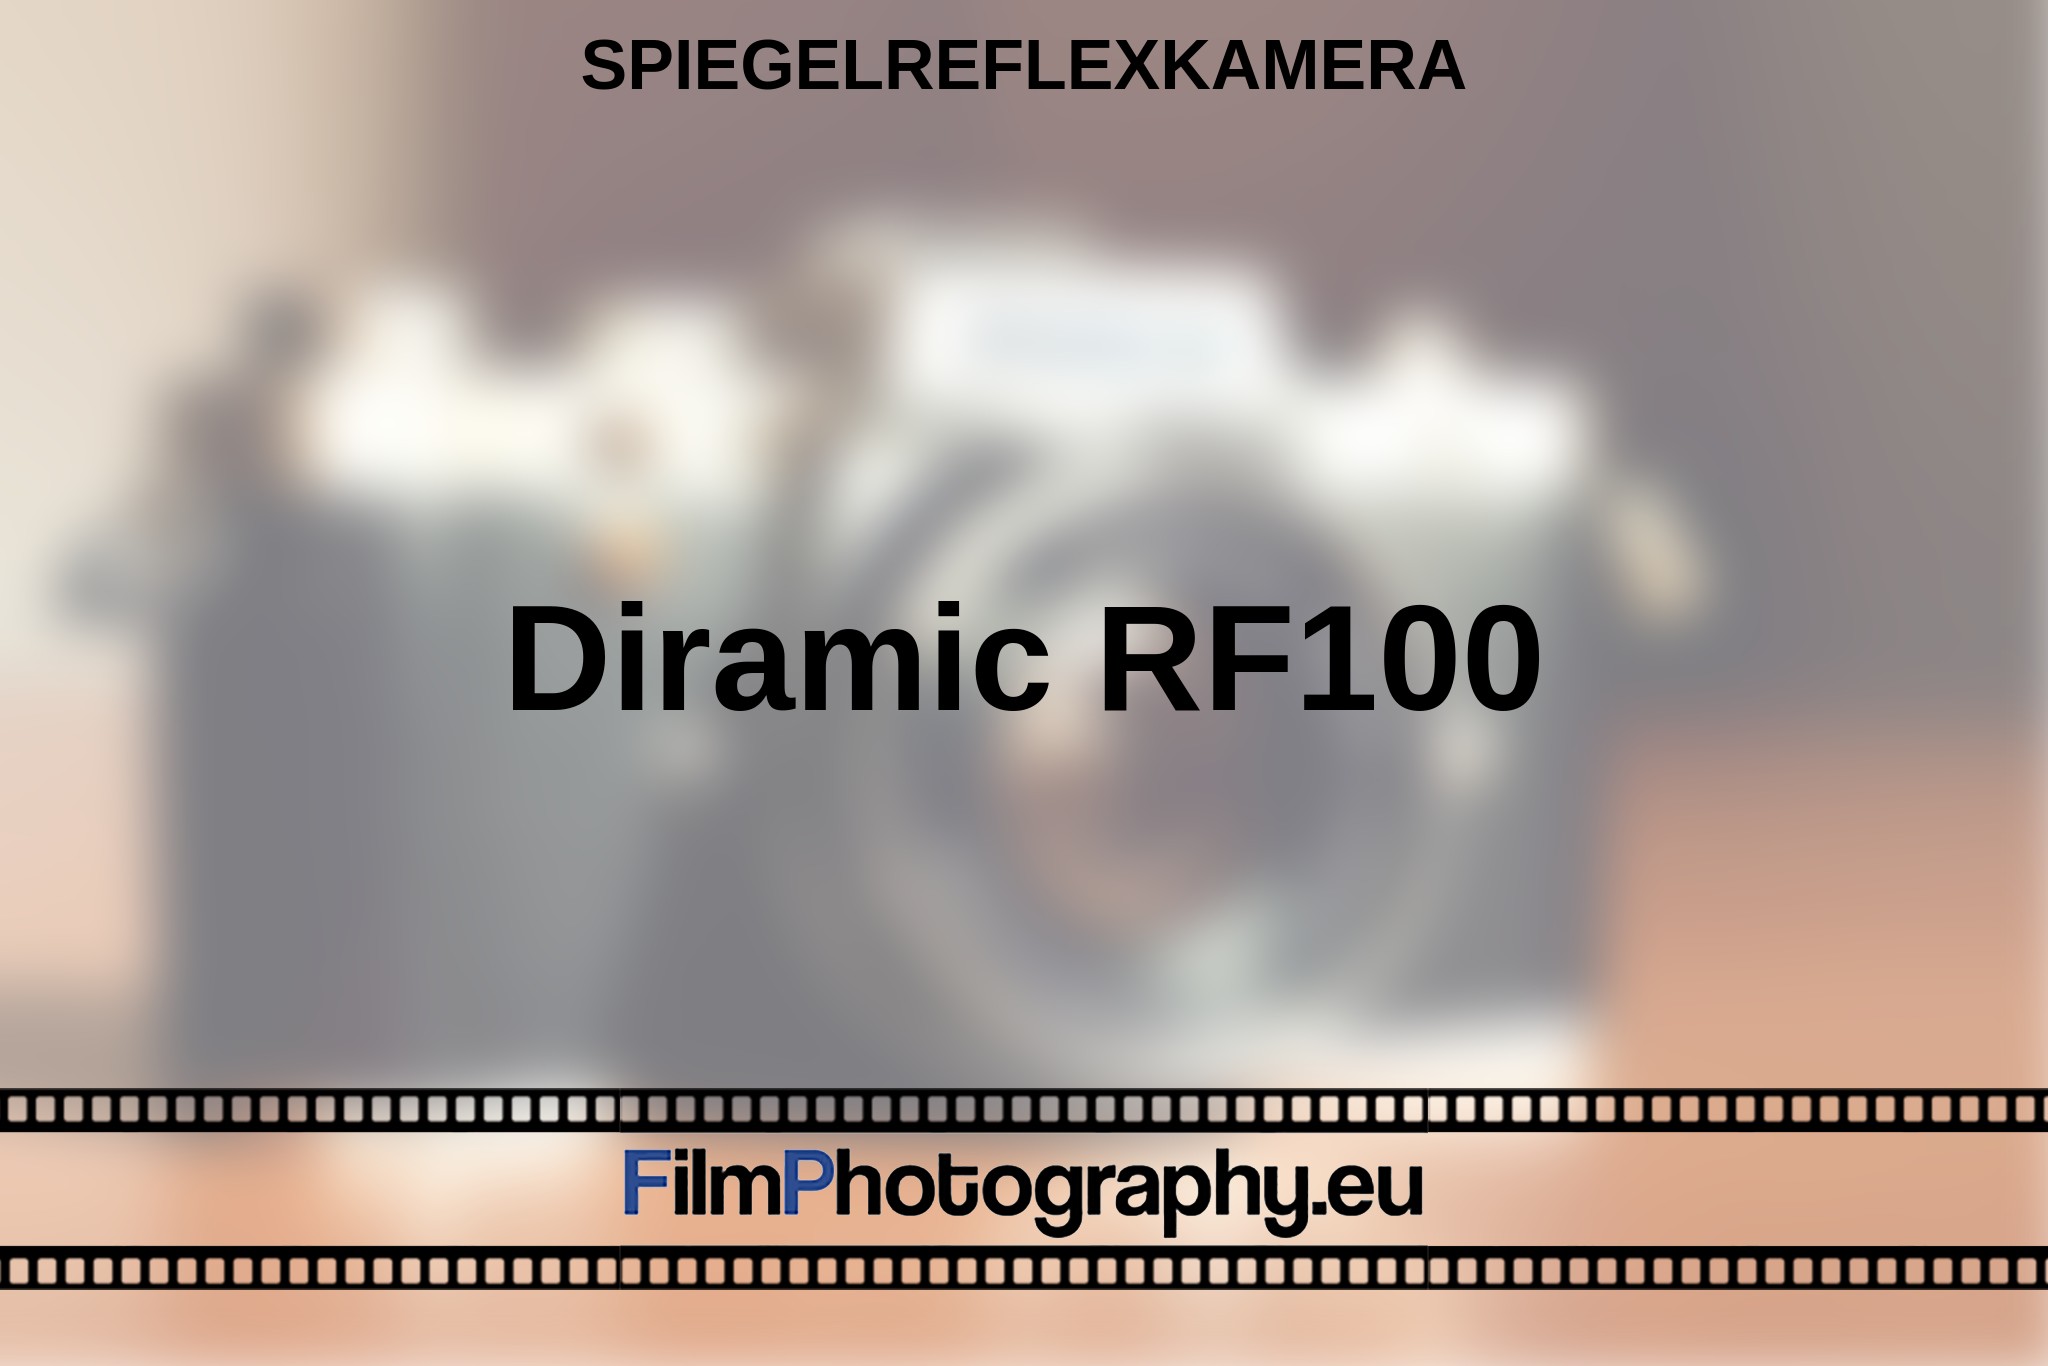 diramic-rf100-spiegelreflexkamera-bnv.jpg